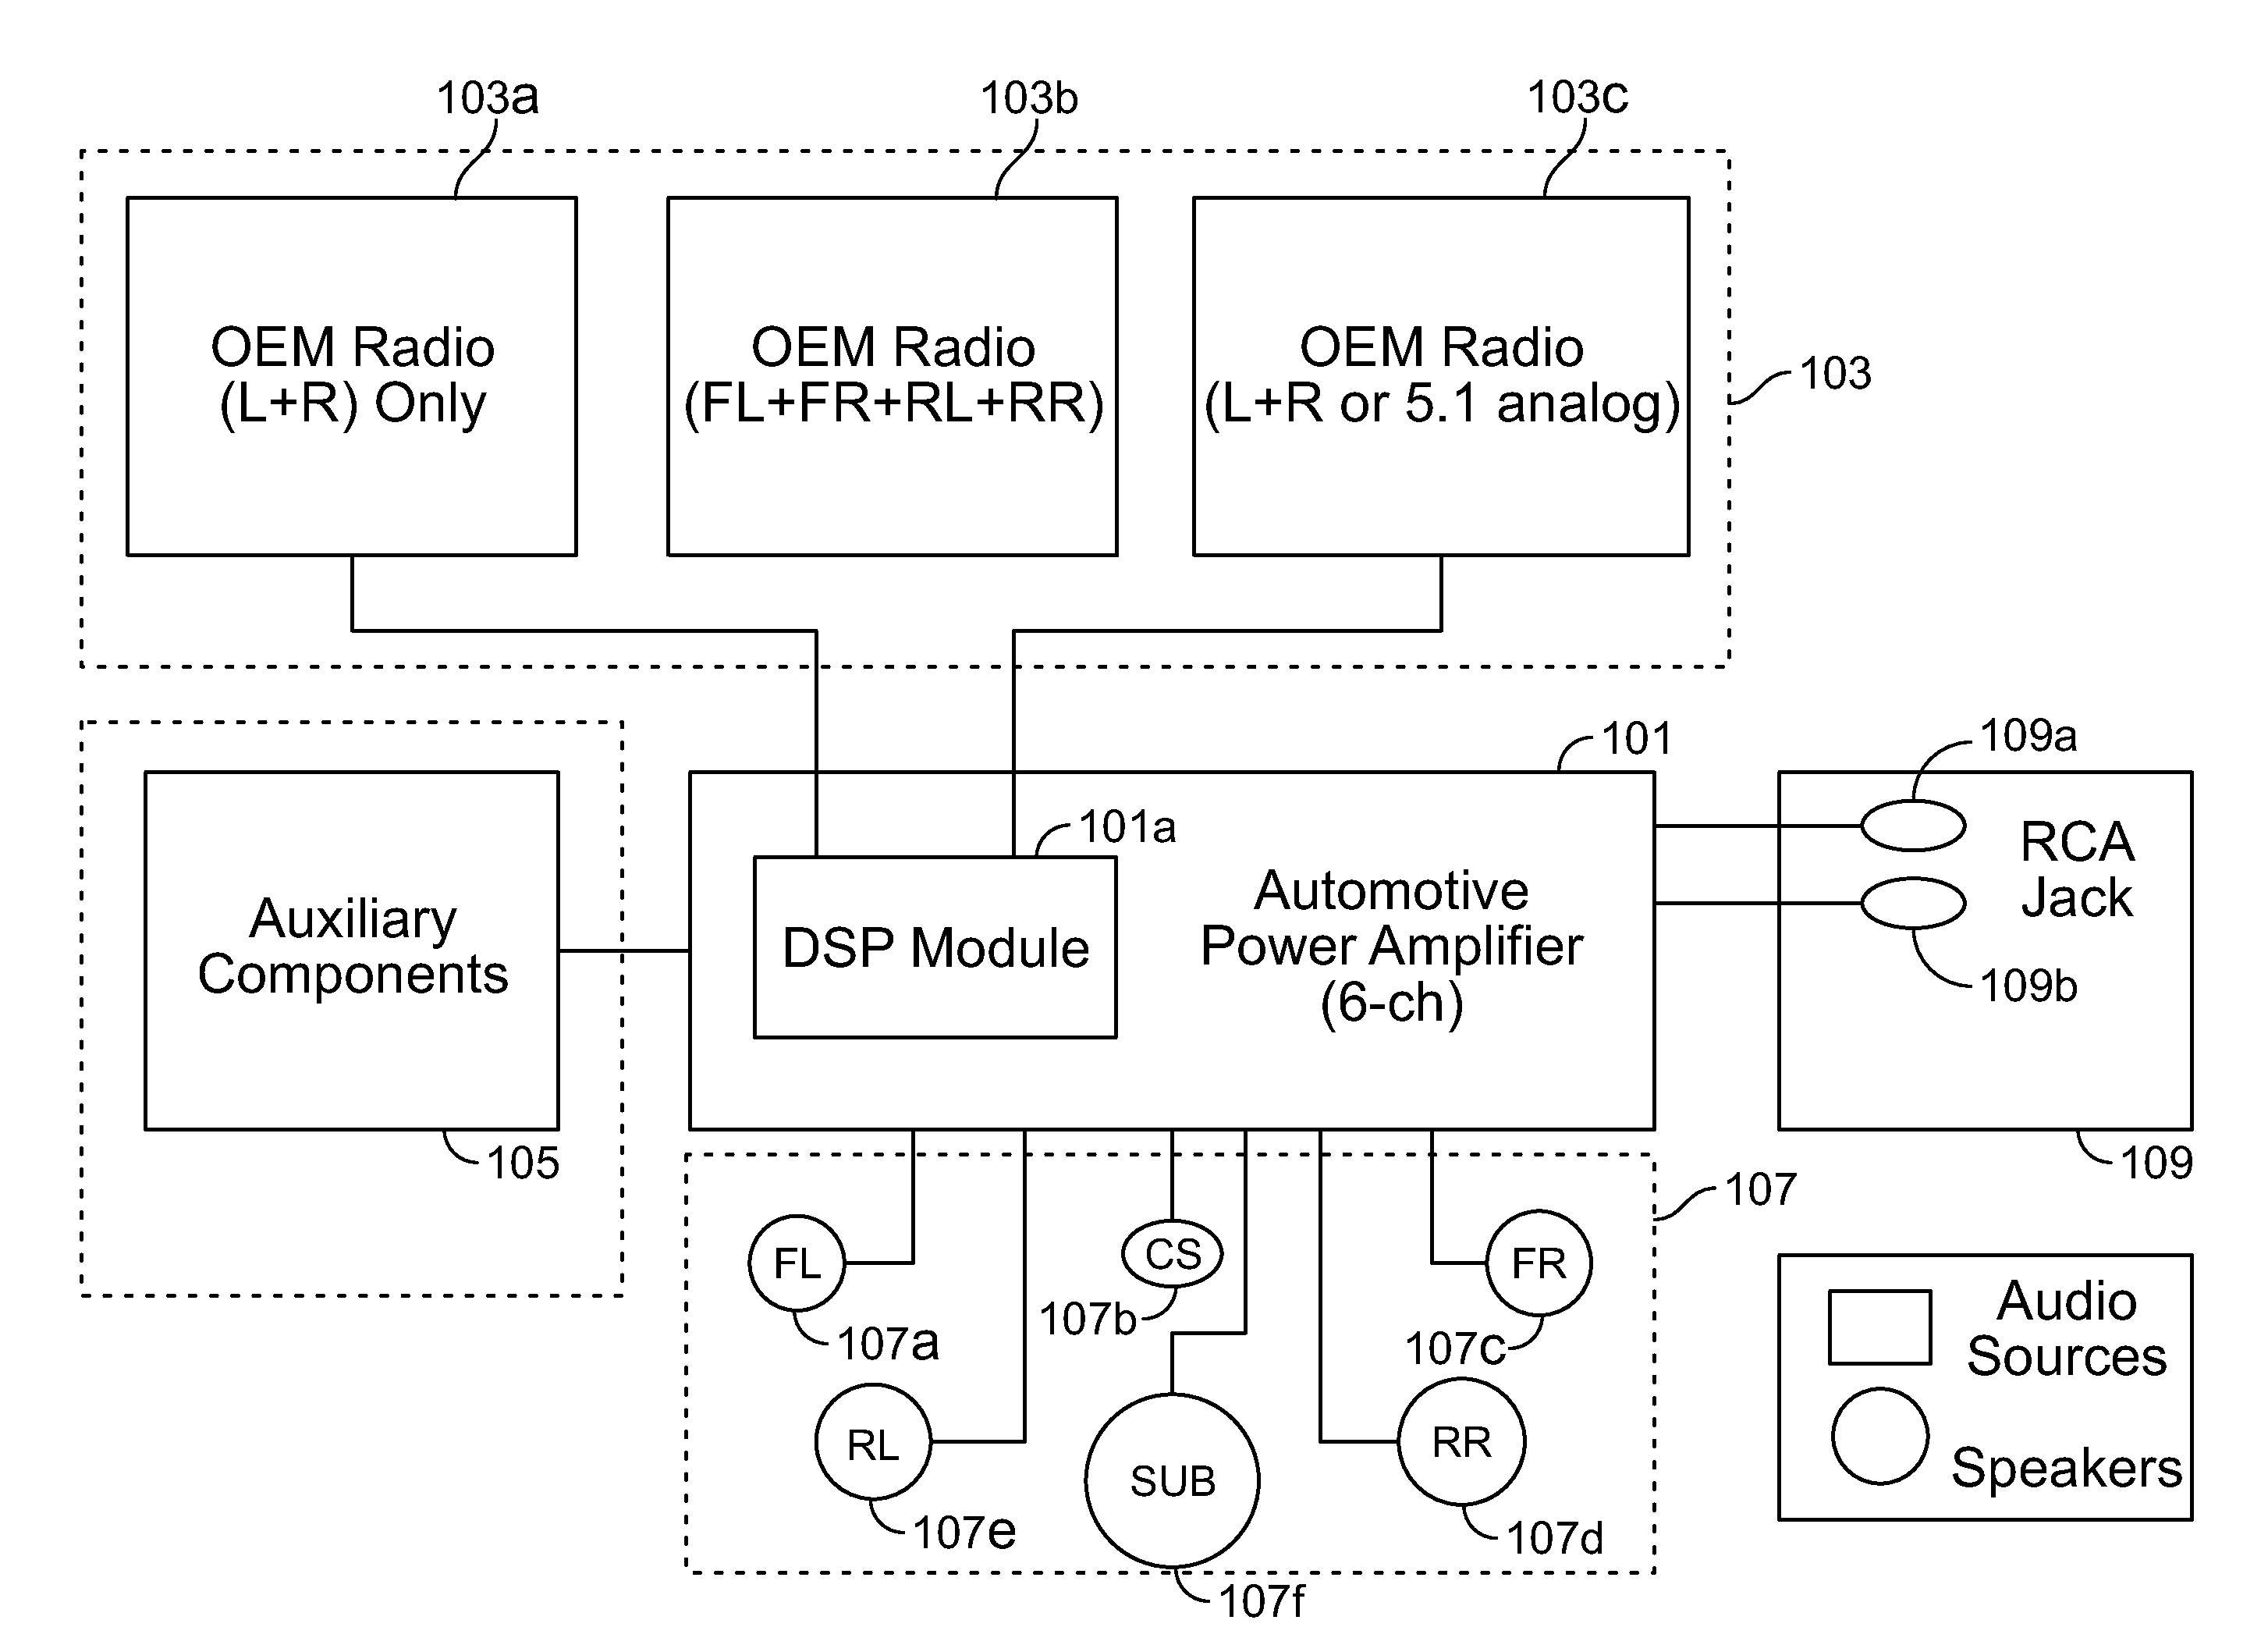 Original equipment manufacturer ("oem") integration amplifier